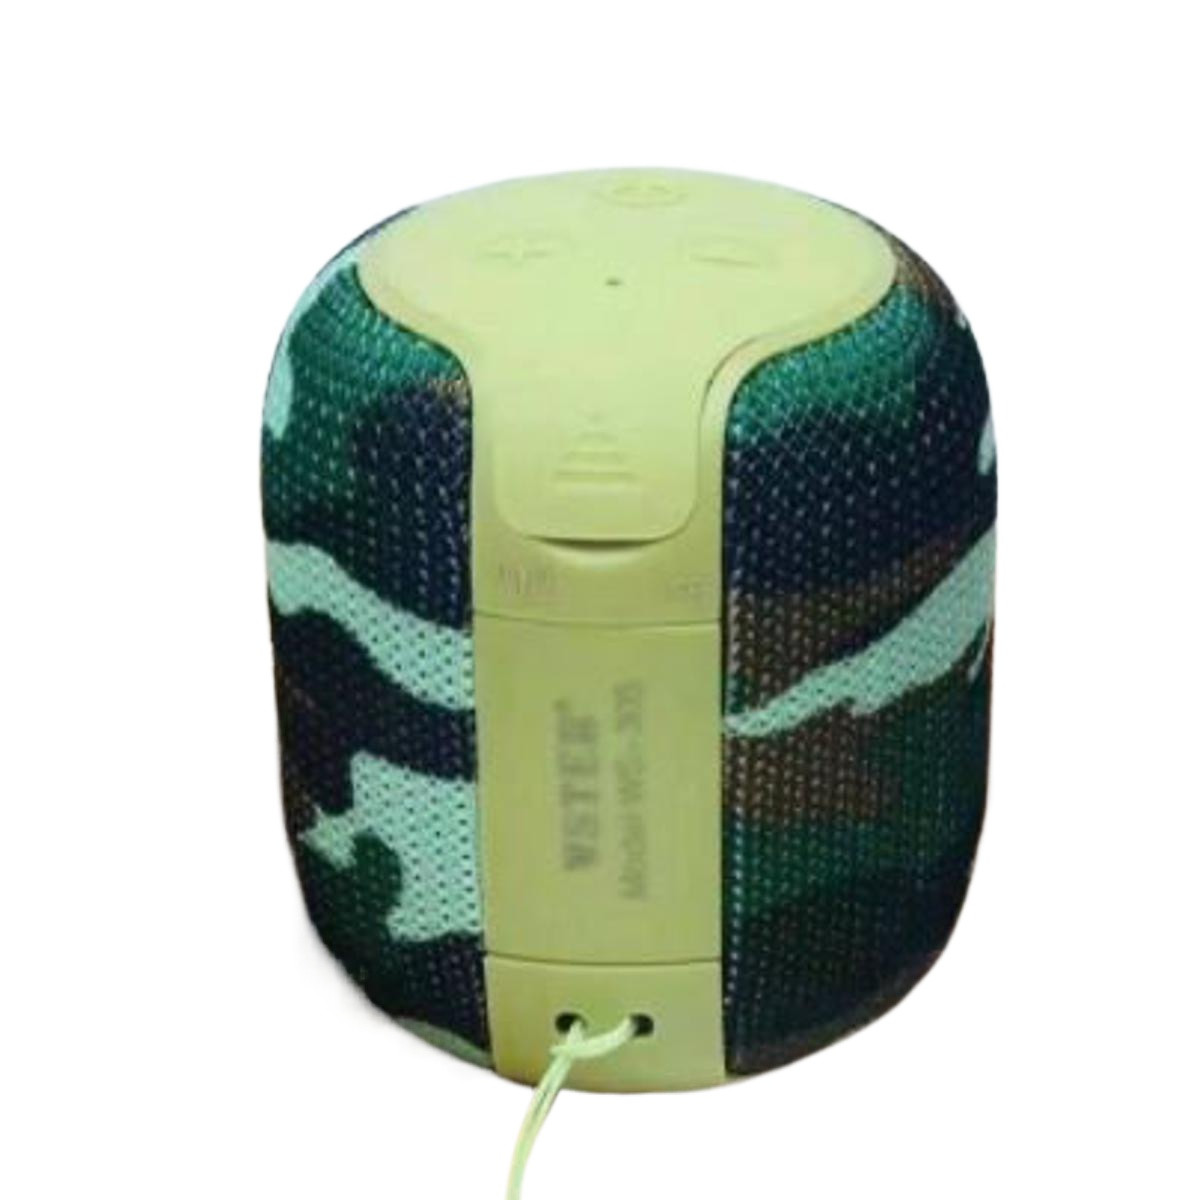 WSTER WS-305 Mini Bluetooth Speaker compact waterproof Super Sound